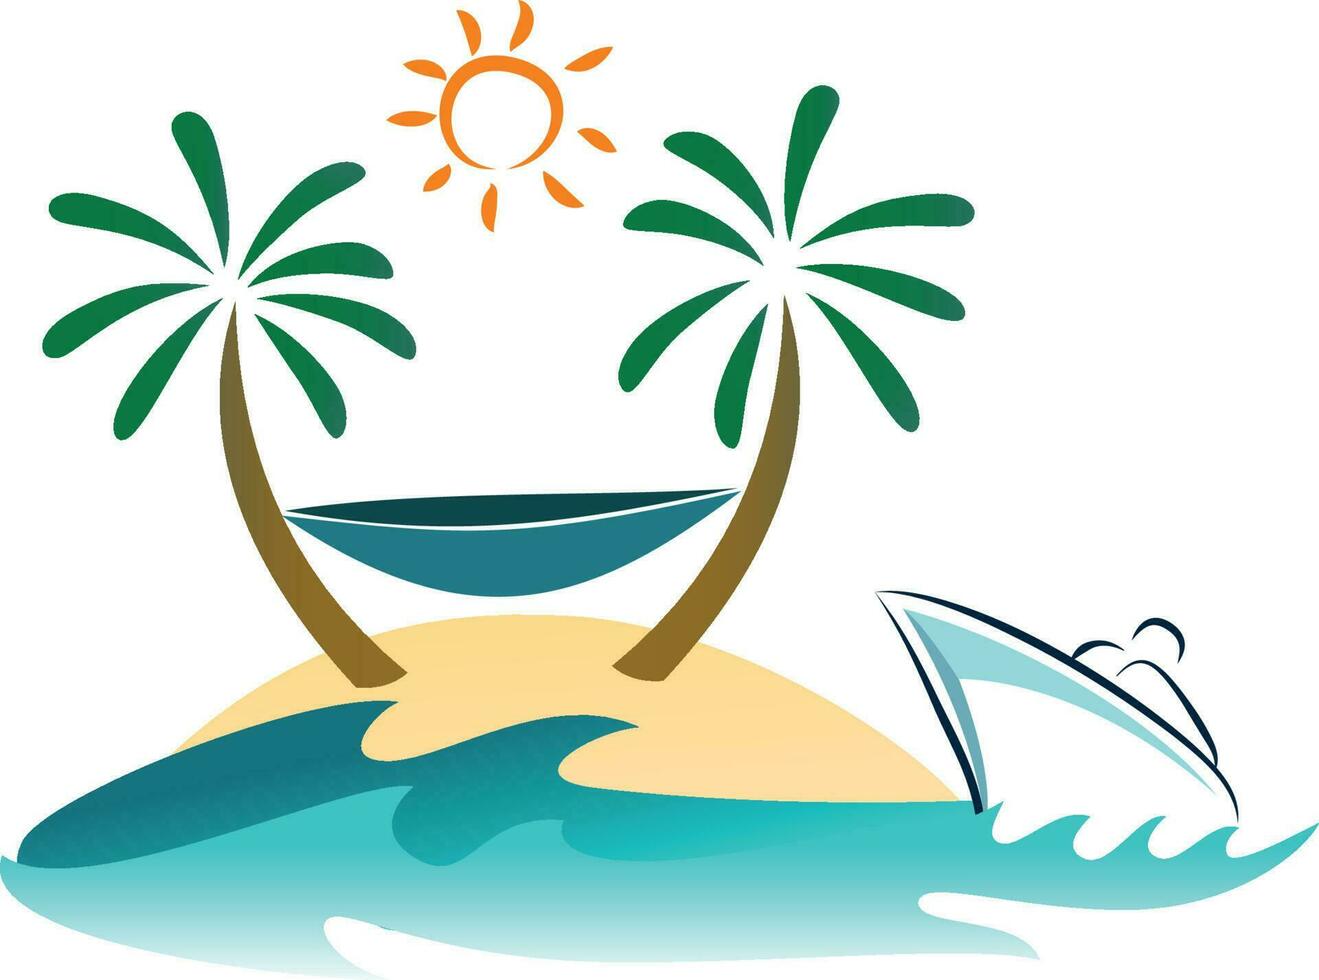 Topical island palm tree beach cruise boat hammock and sunset scene logo concept vector illustration